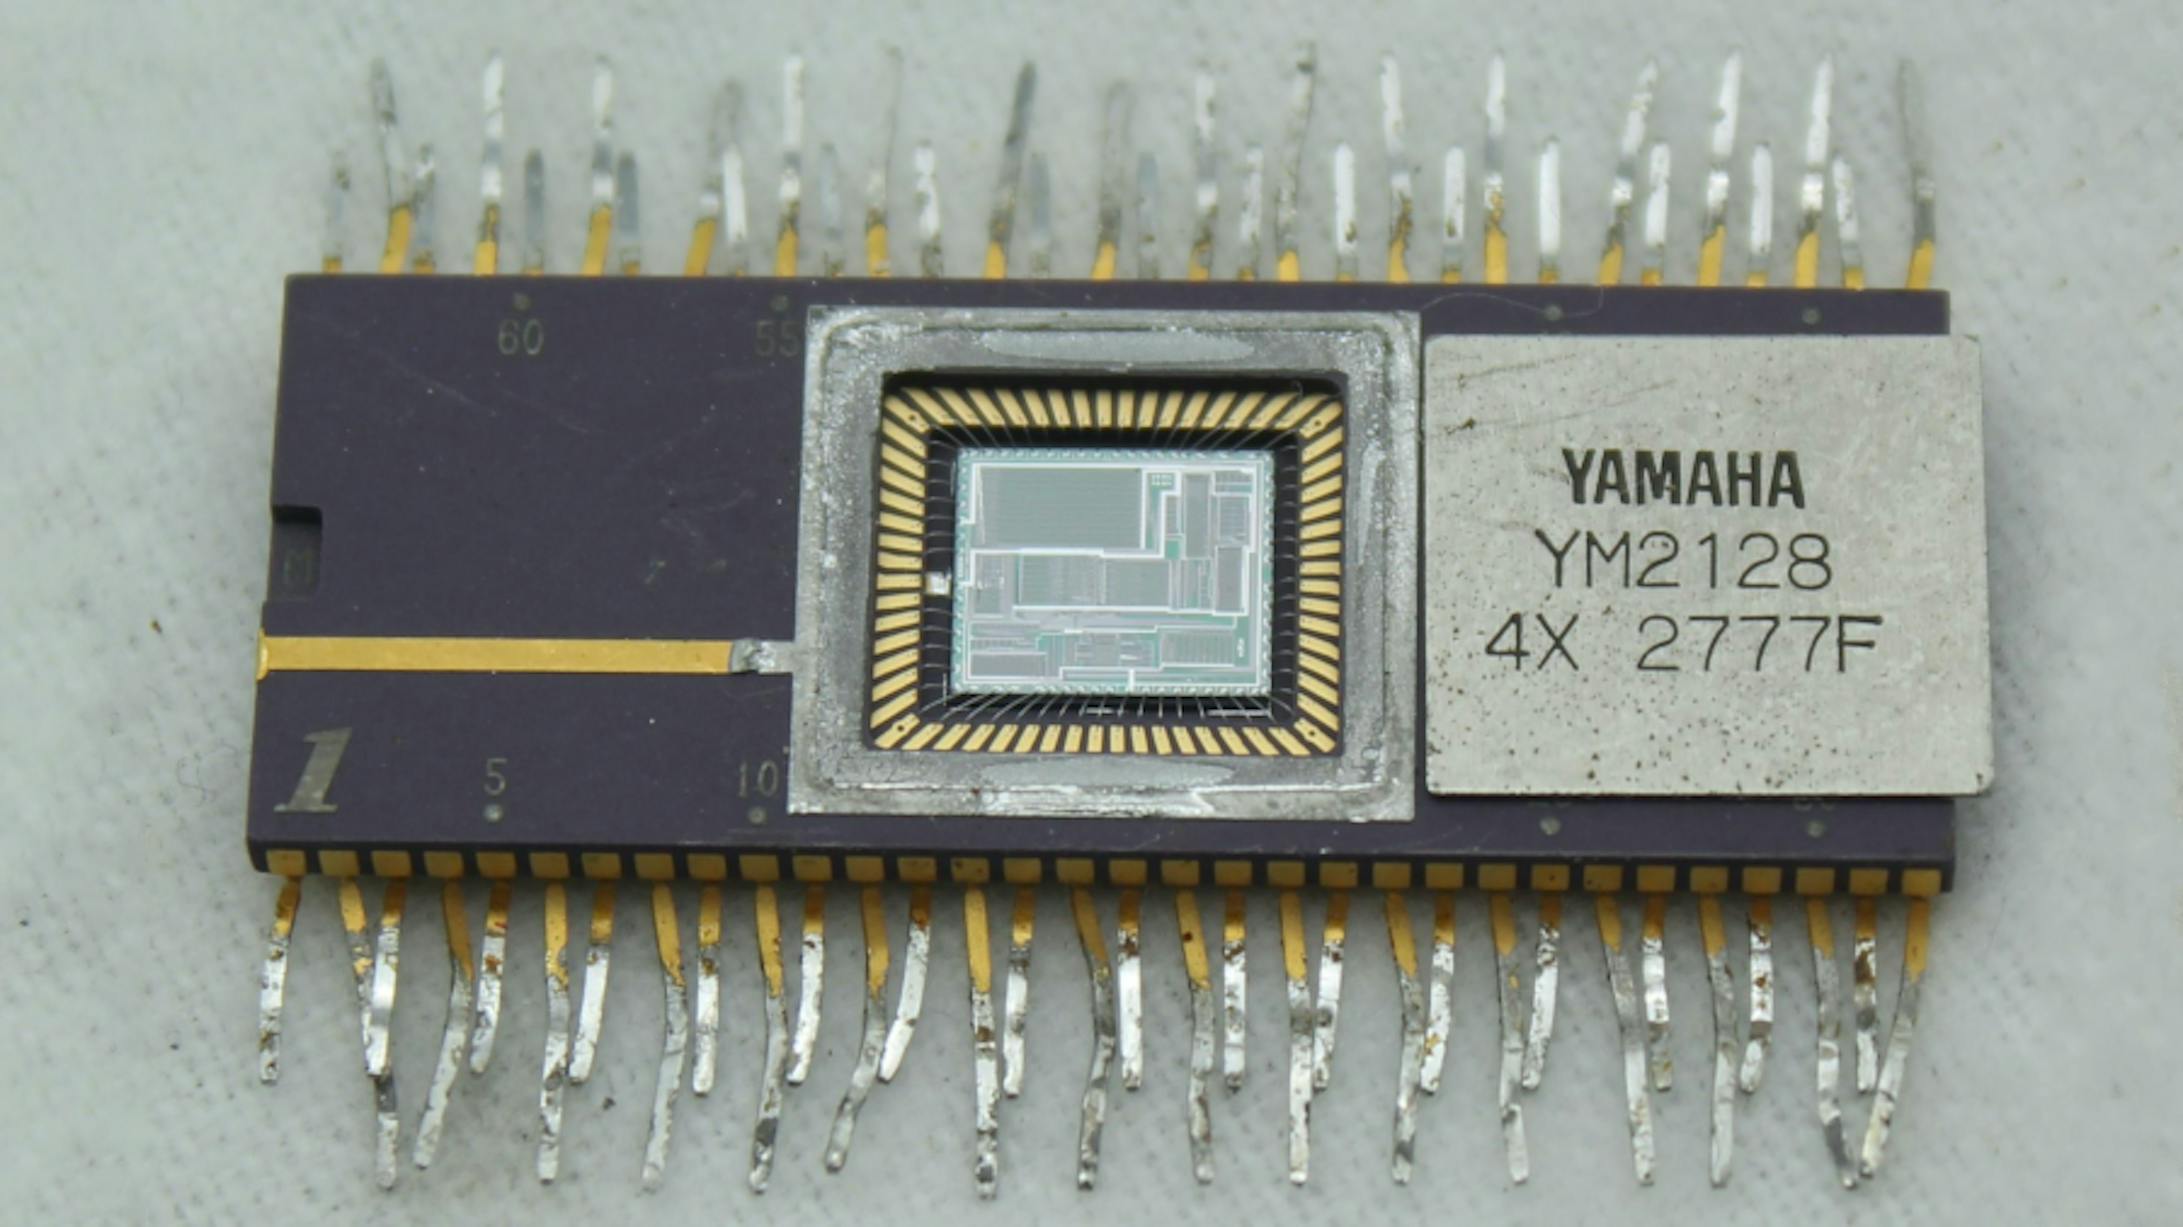 Ken Shirriff Reverse Engineers Yamaha's Classic YM21280 OPS Chip 